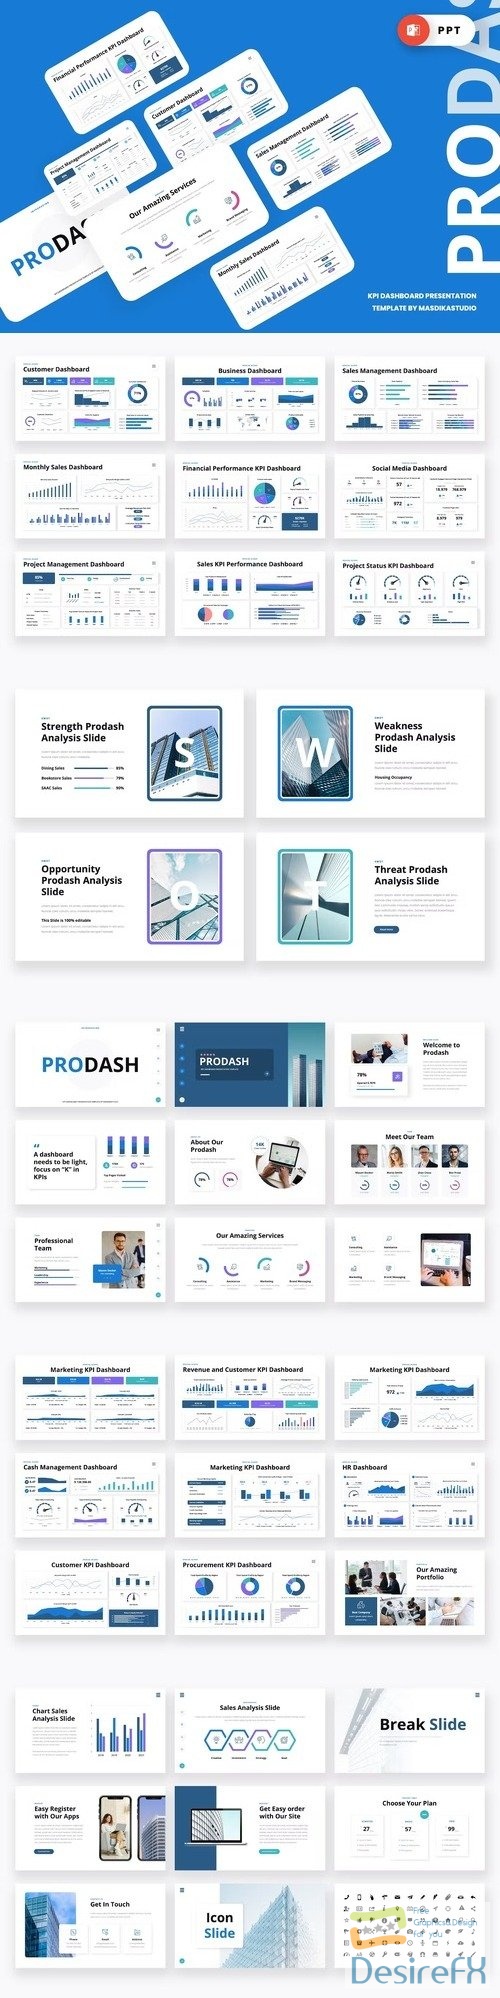 Prodash - KPI Dashboard Powerpoint Template